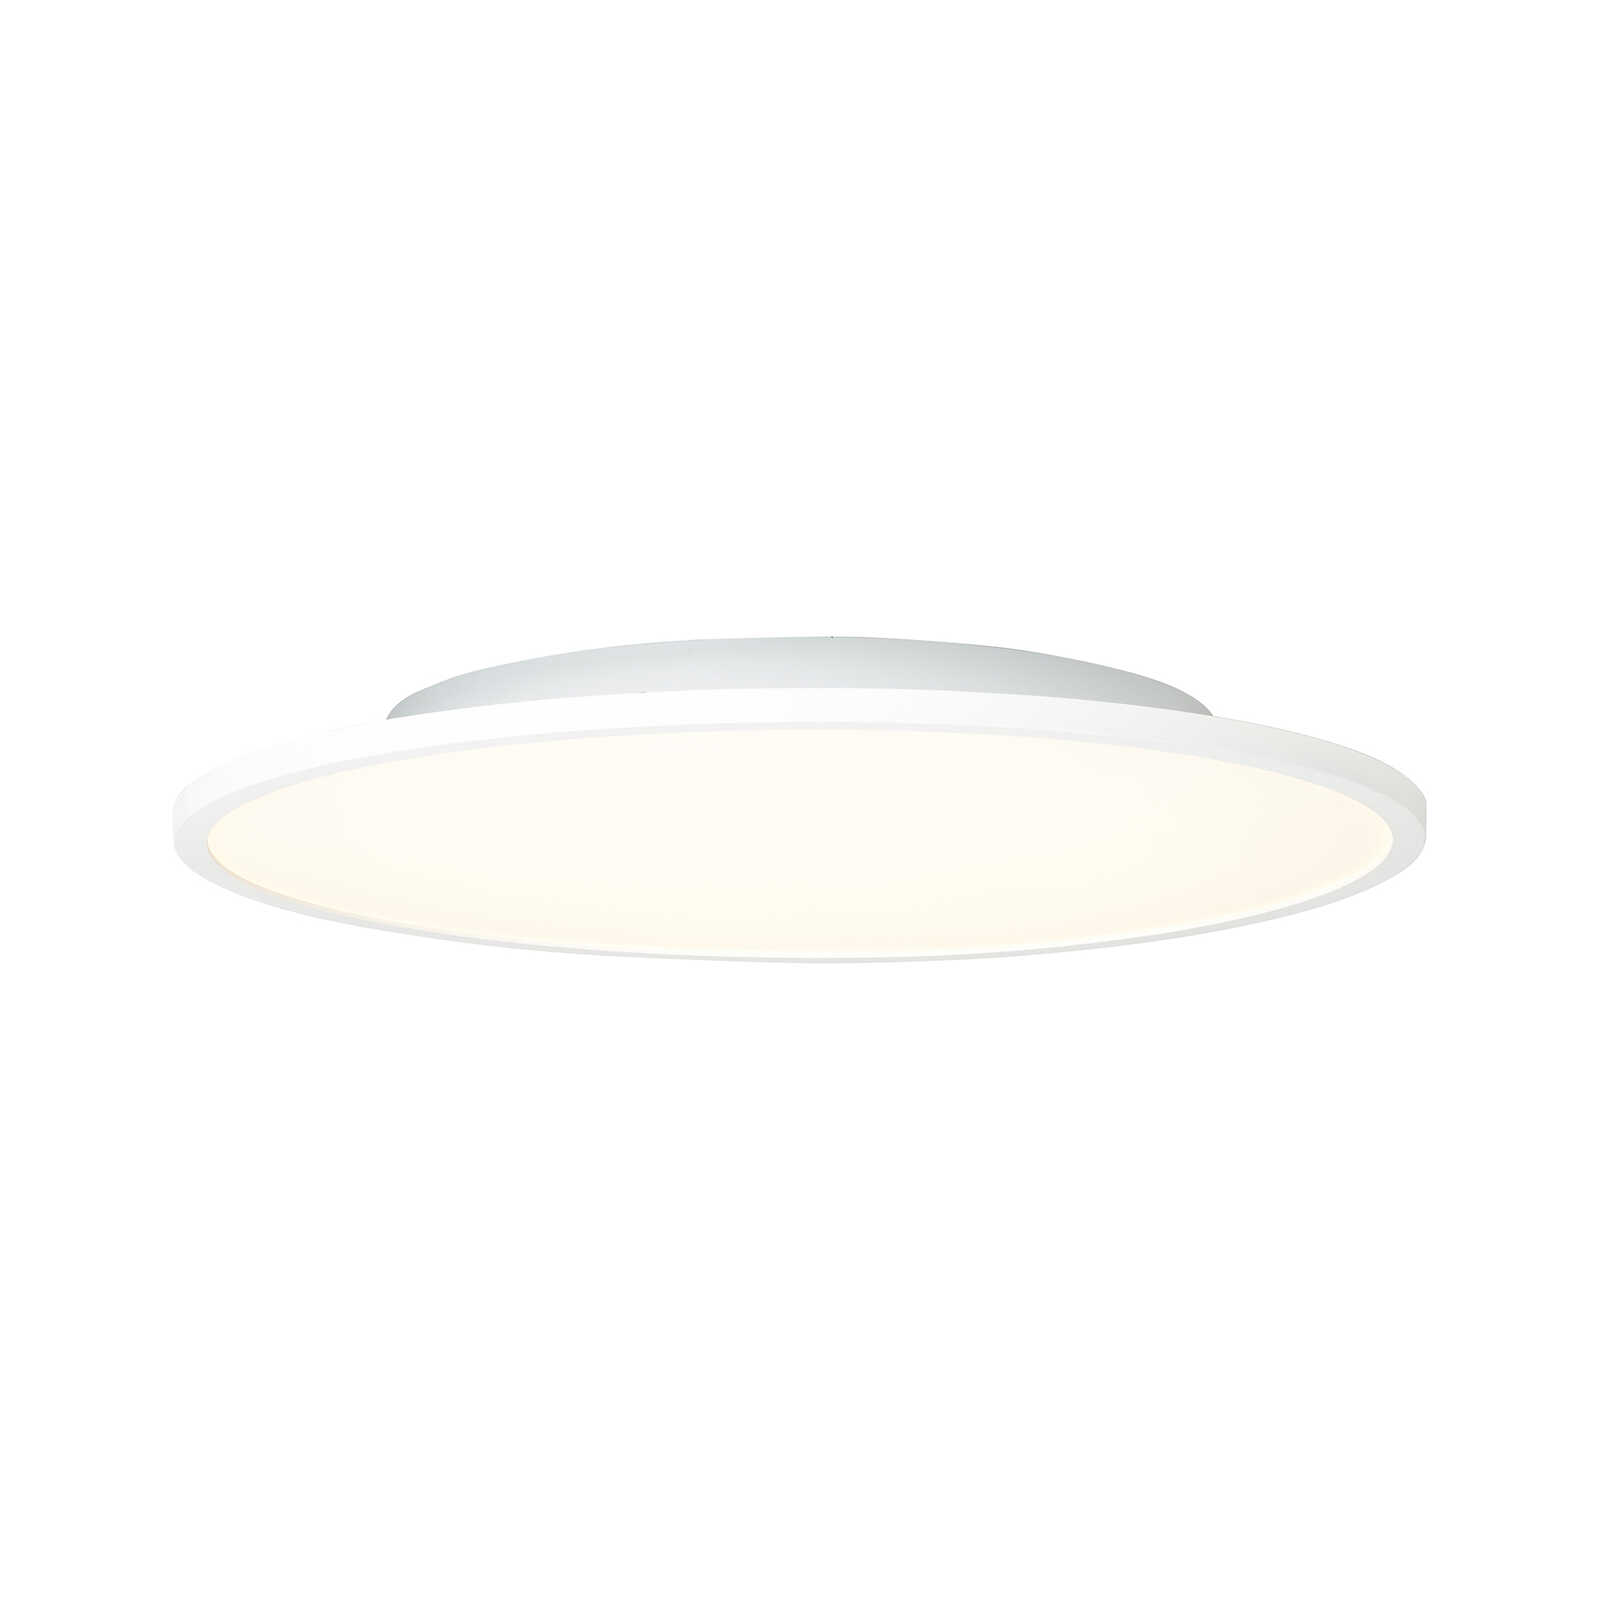 Plastic ceiling light - Constantin 6 - White
